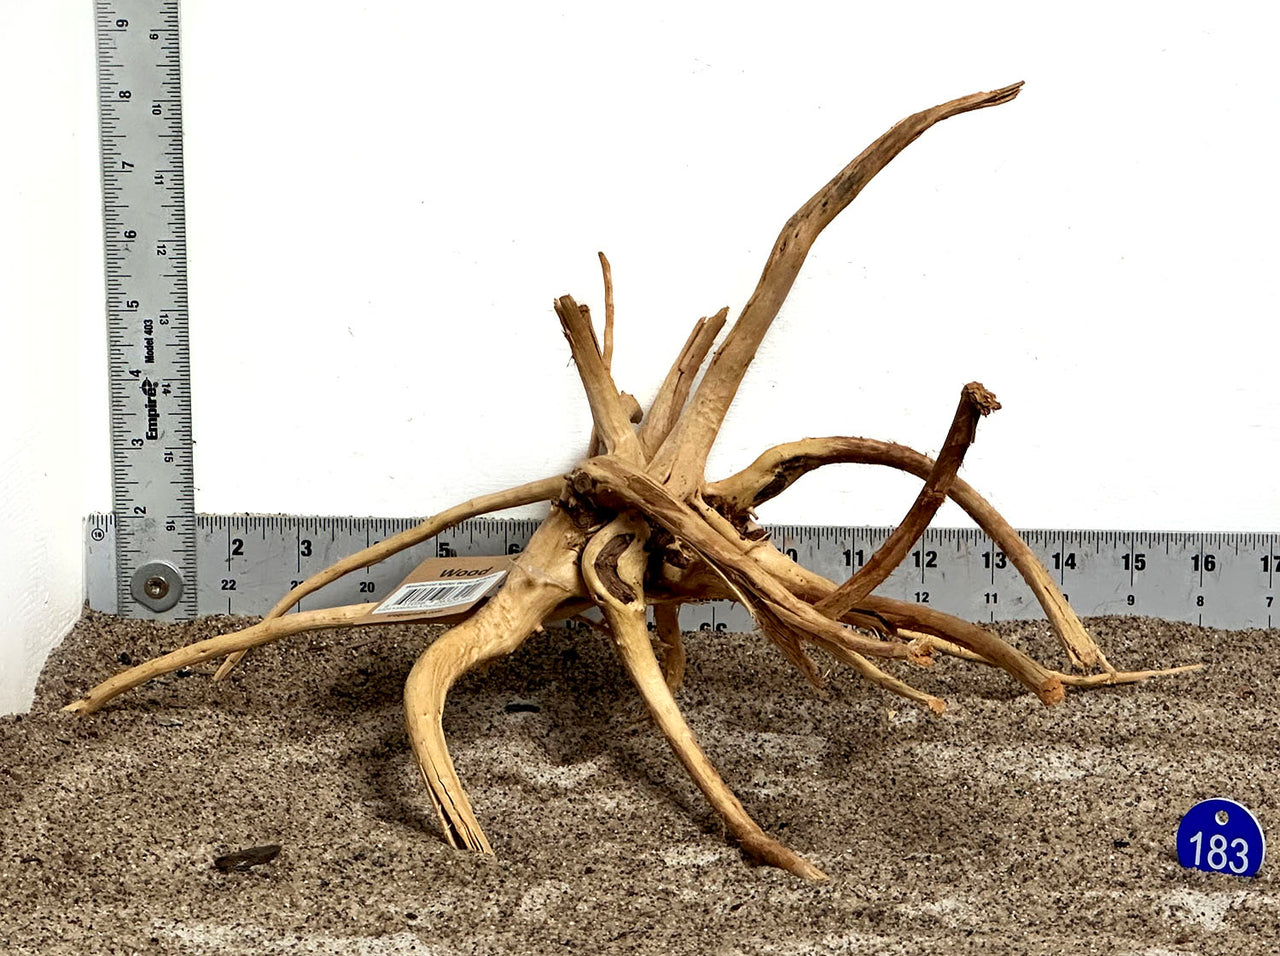 WYSIWYG #183BU - Weathered Spider Wood (Medium)